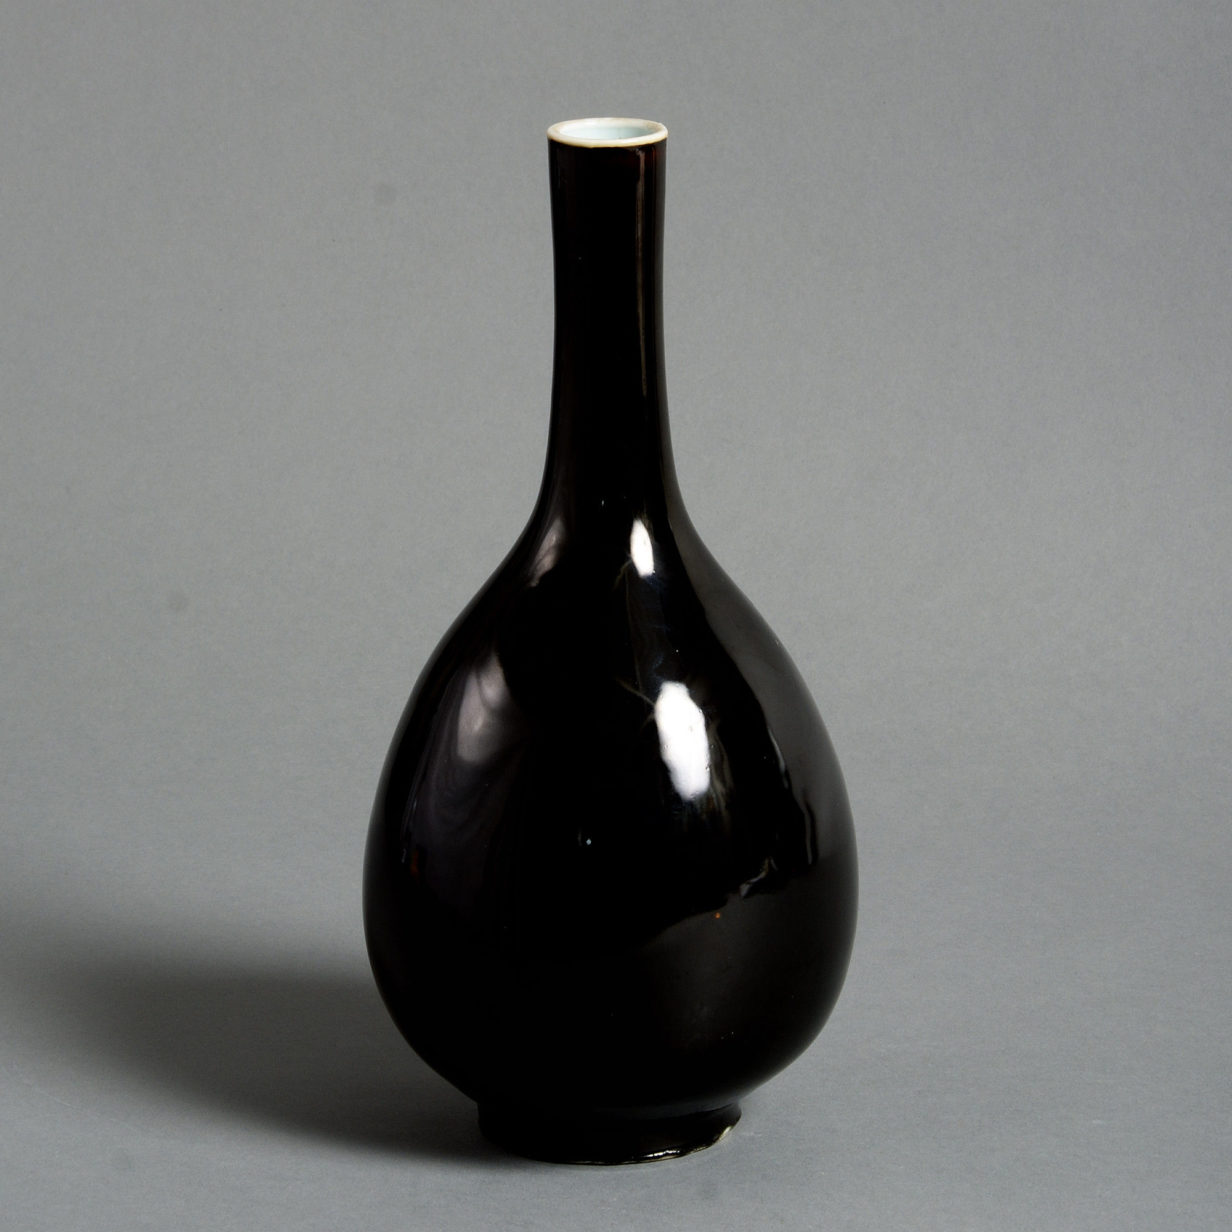 A 19th Century Black Glazed Porcelain Bottle Vase